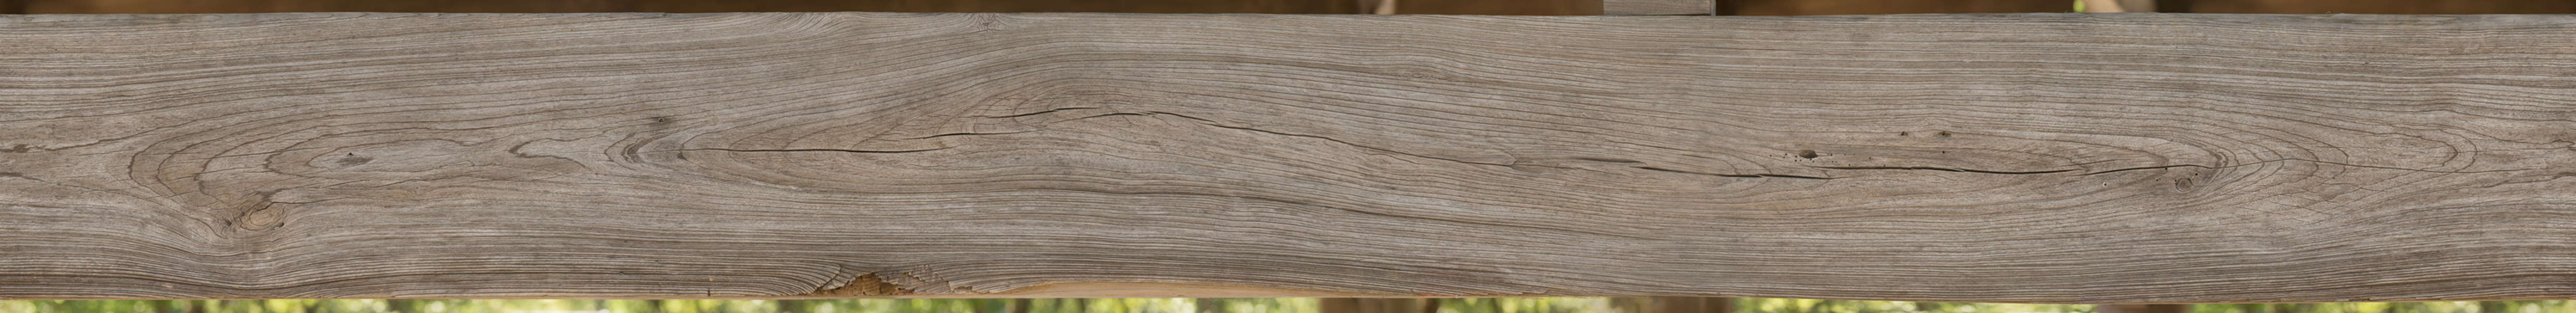 Woodplanksbare0442 Free Background Texture Wood Grain Beam Bare